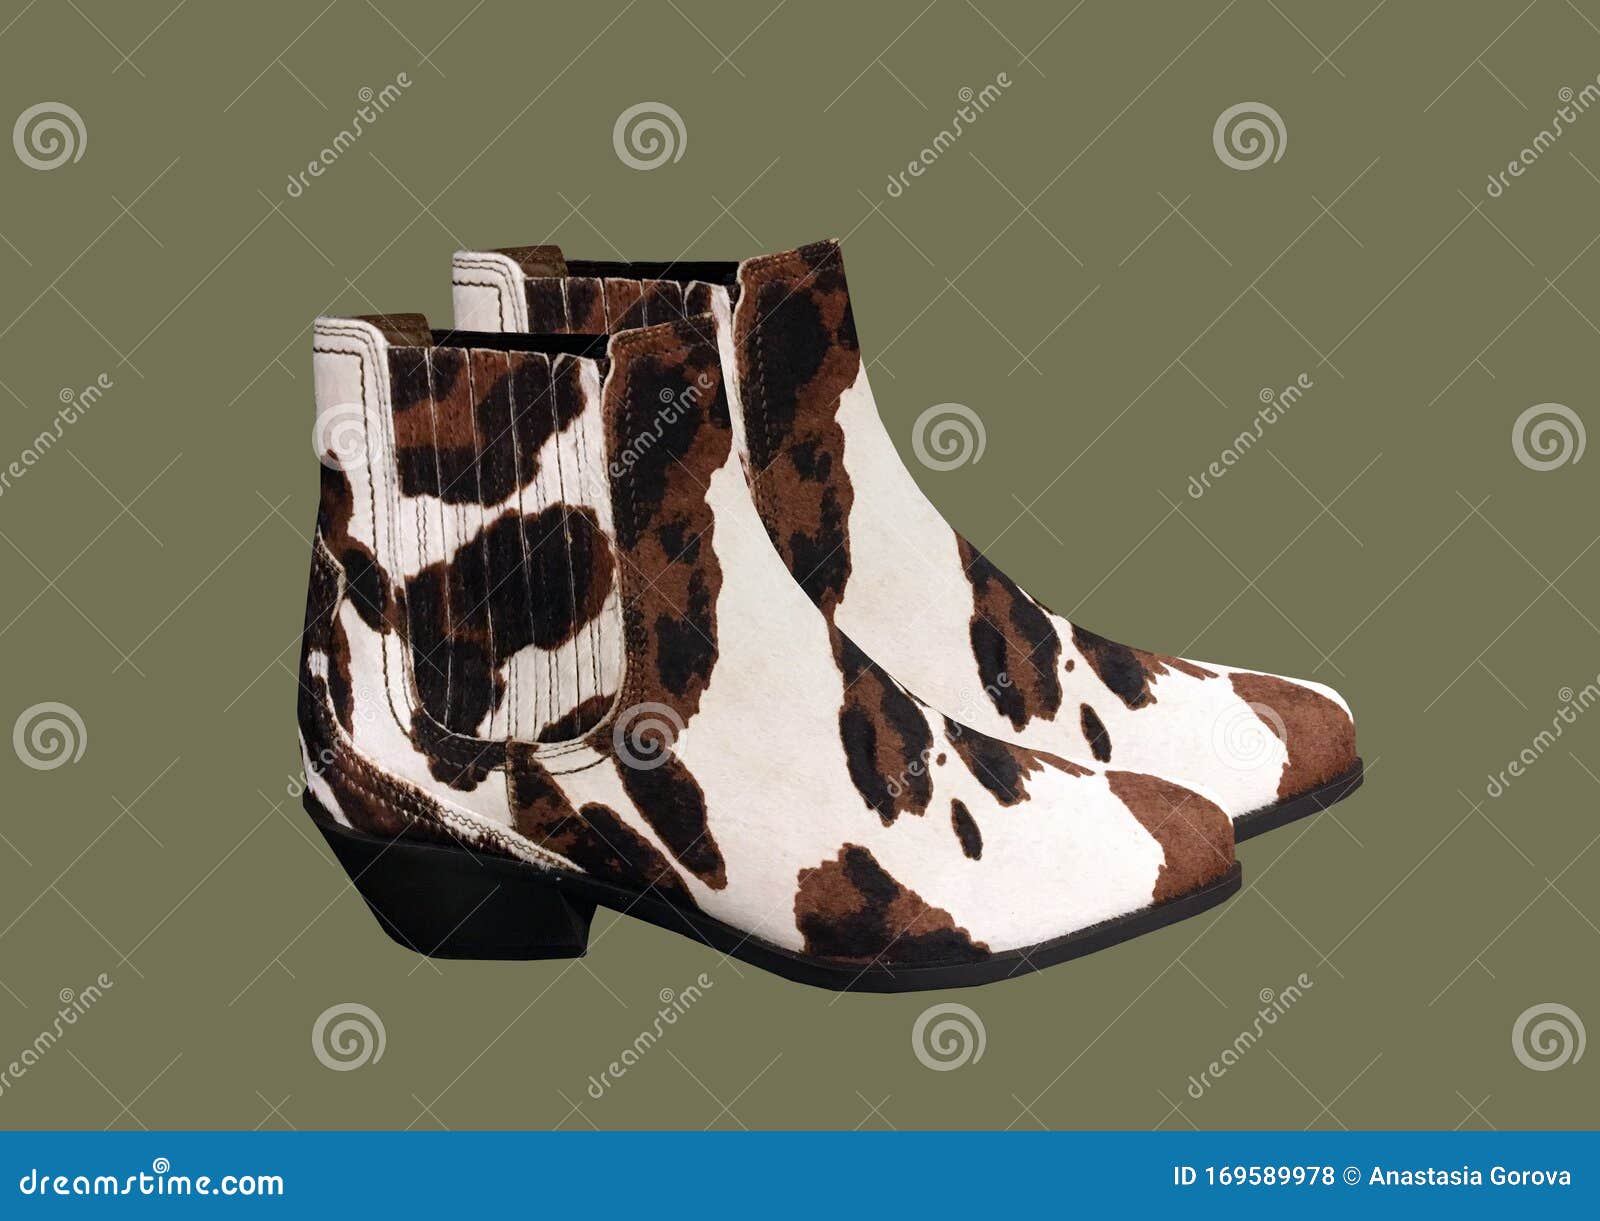 animal print heeled boots